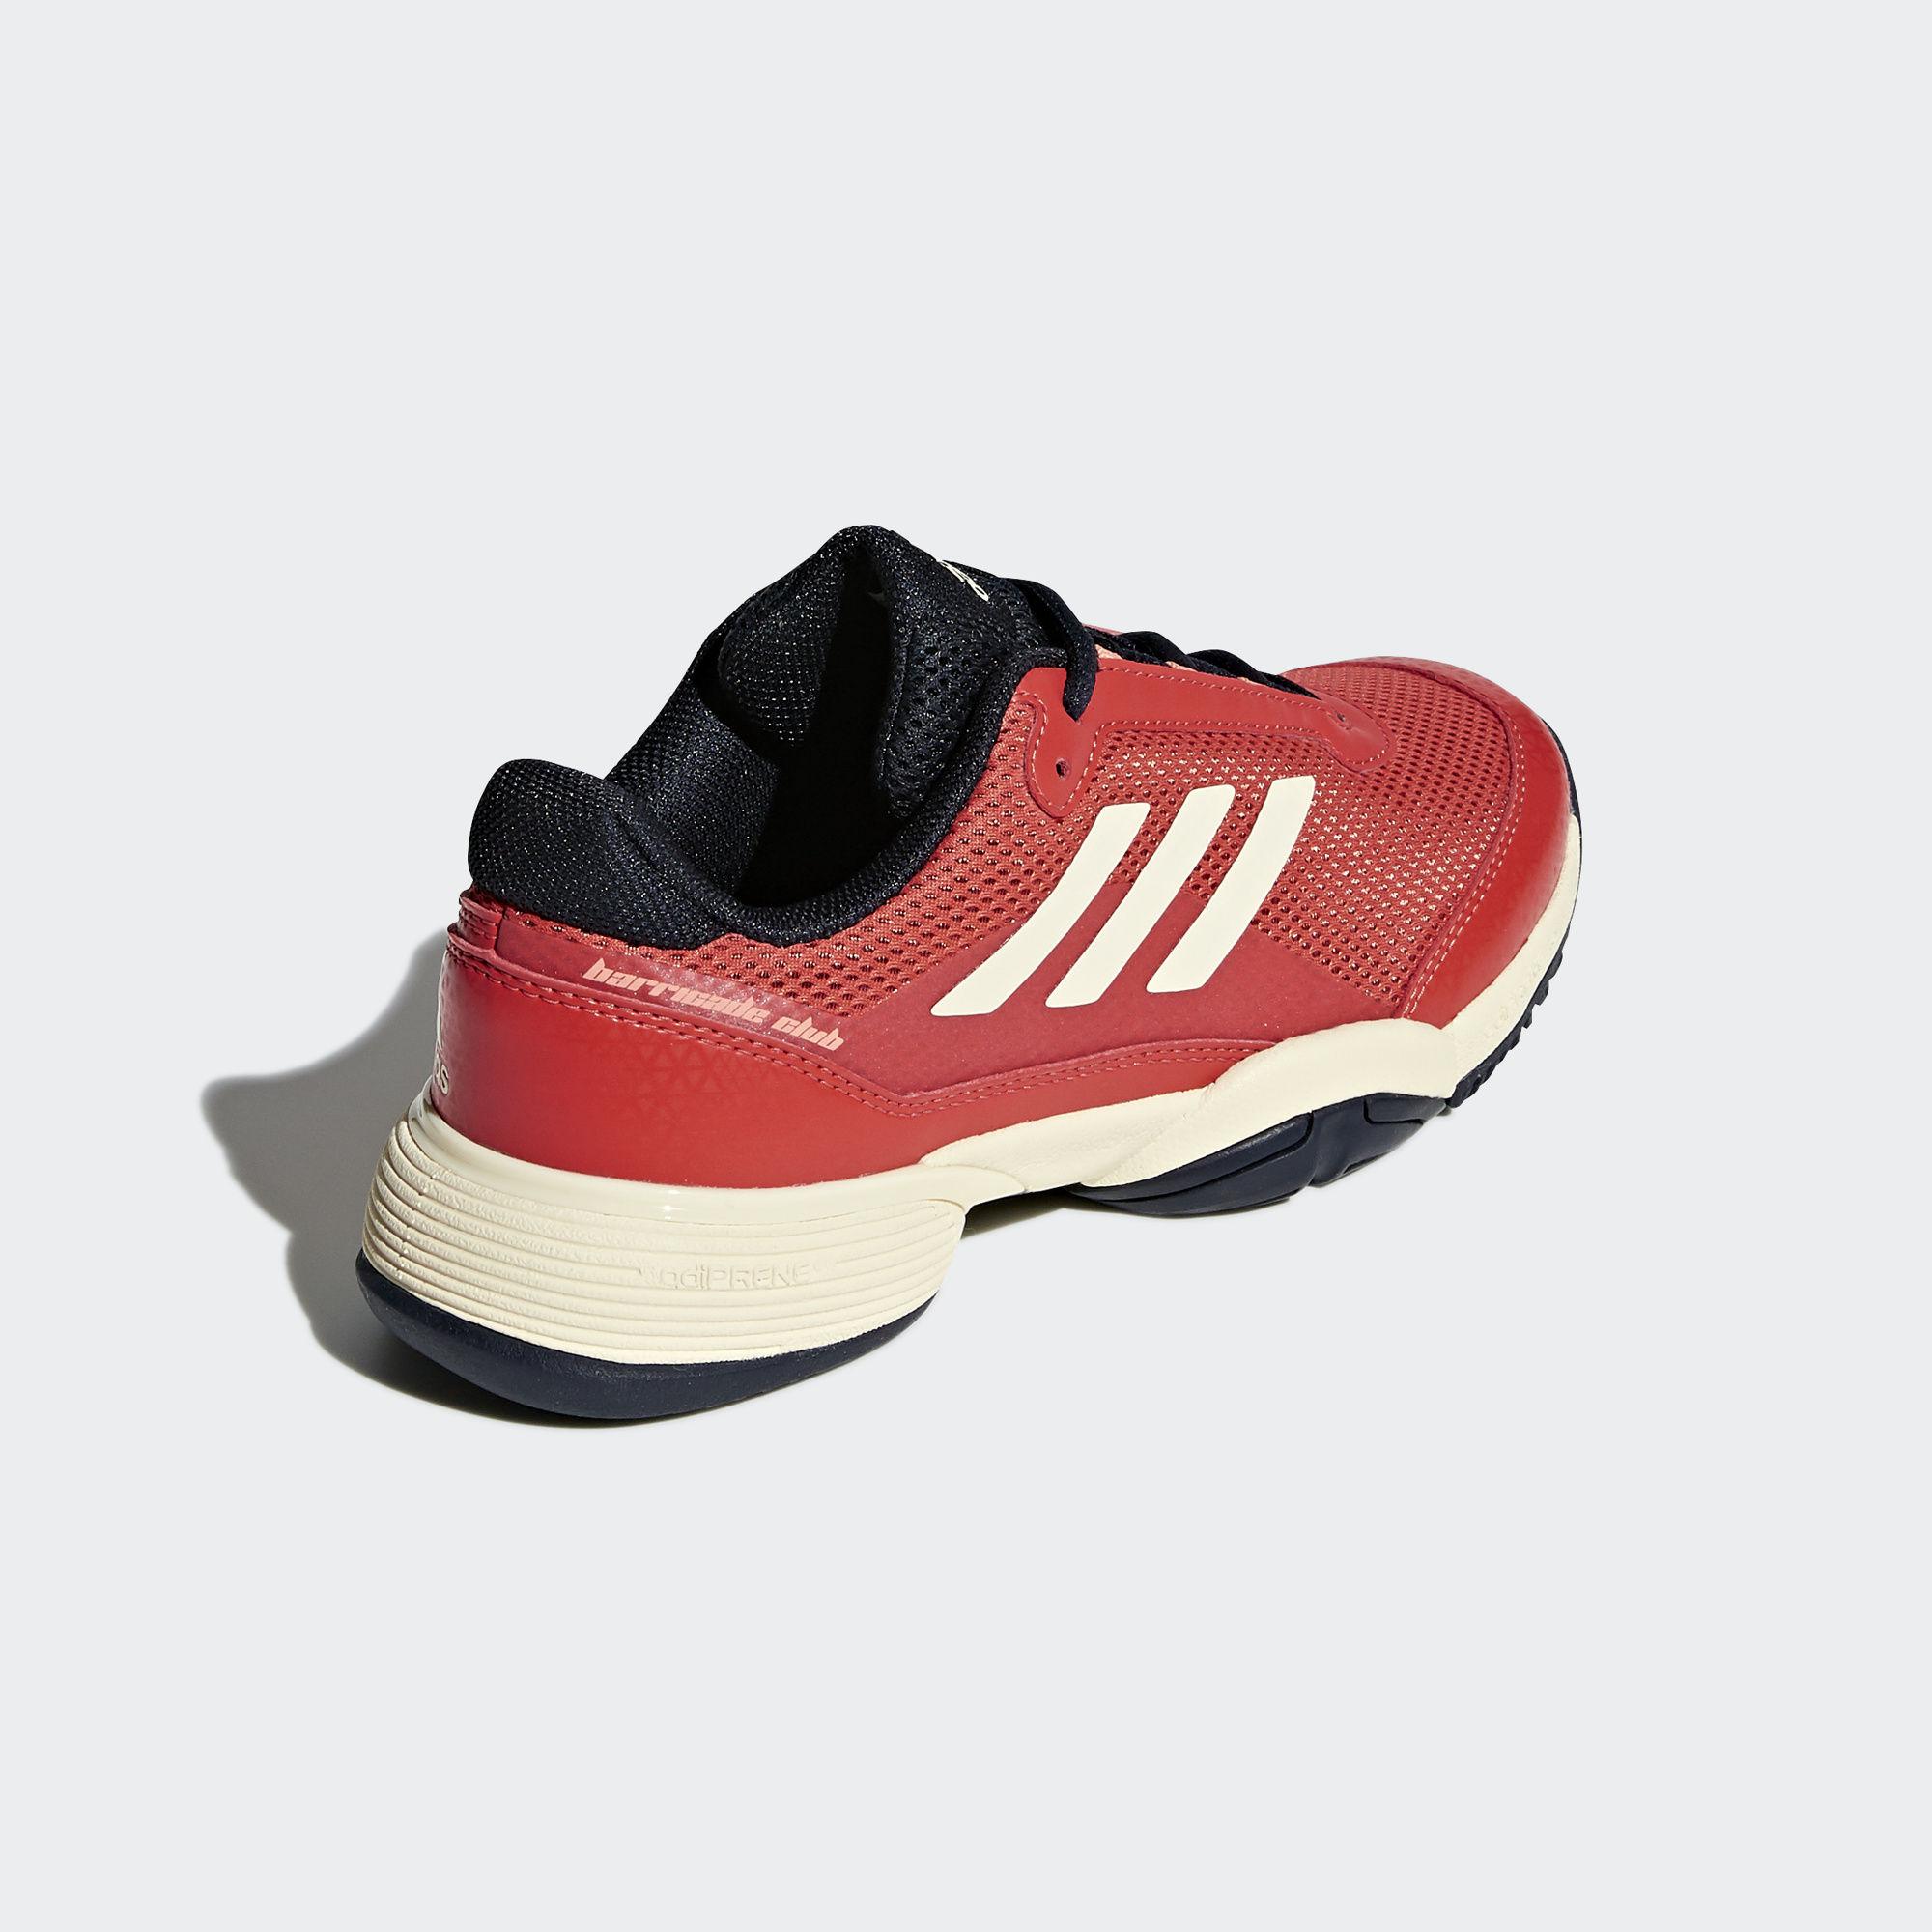 Adidas Kids Barricade Club Tennis Shoes - Coral - Tennisnuts.com